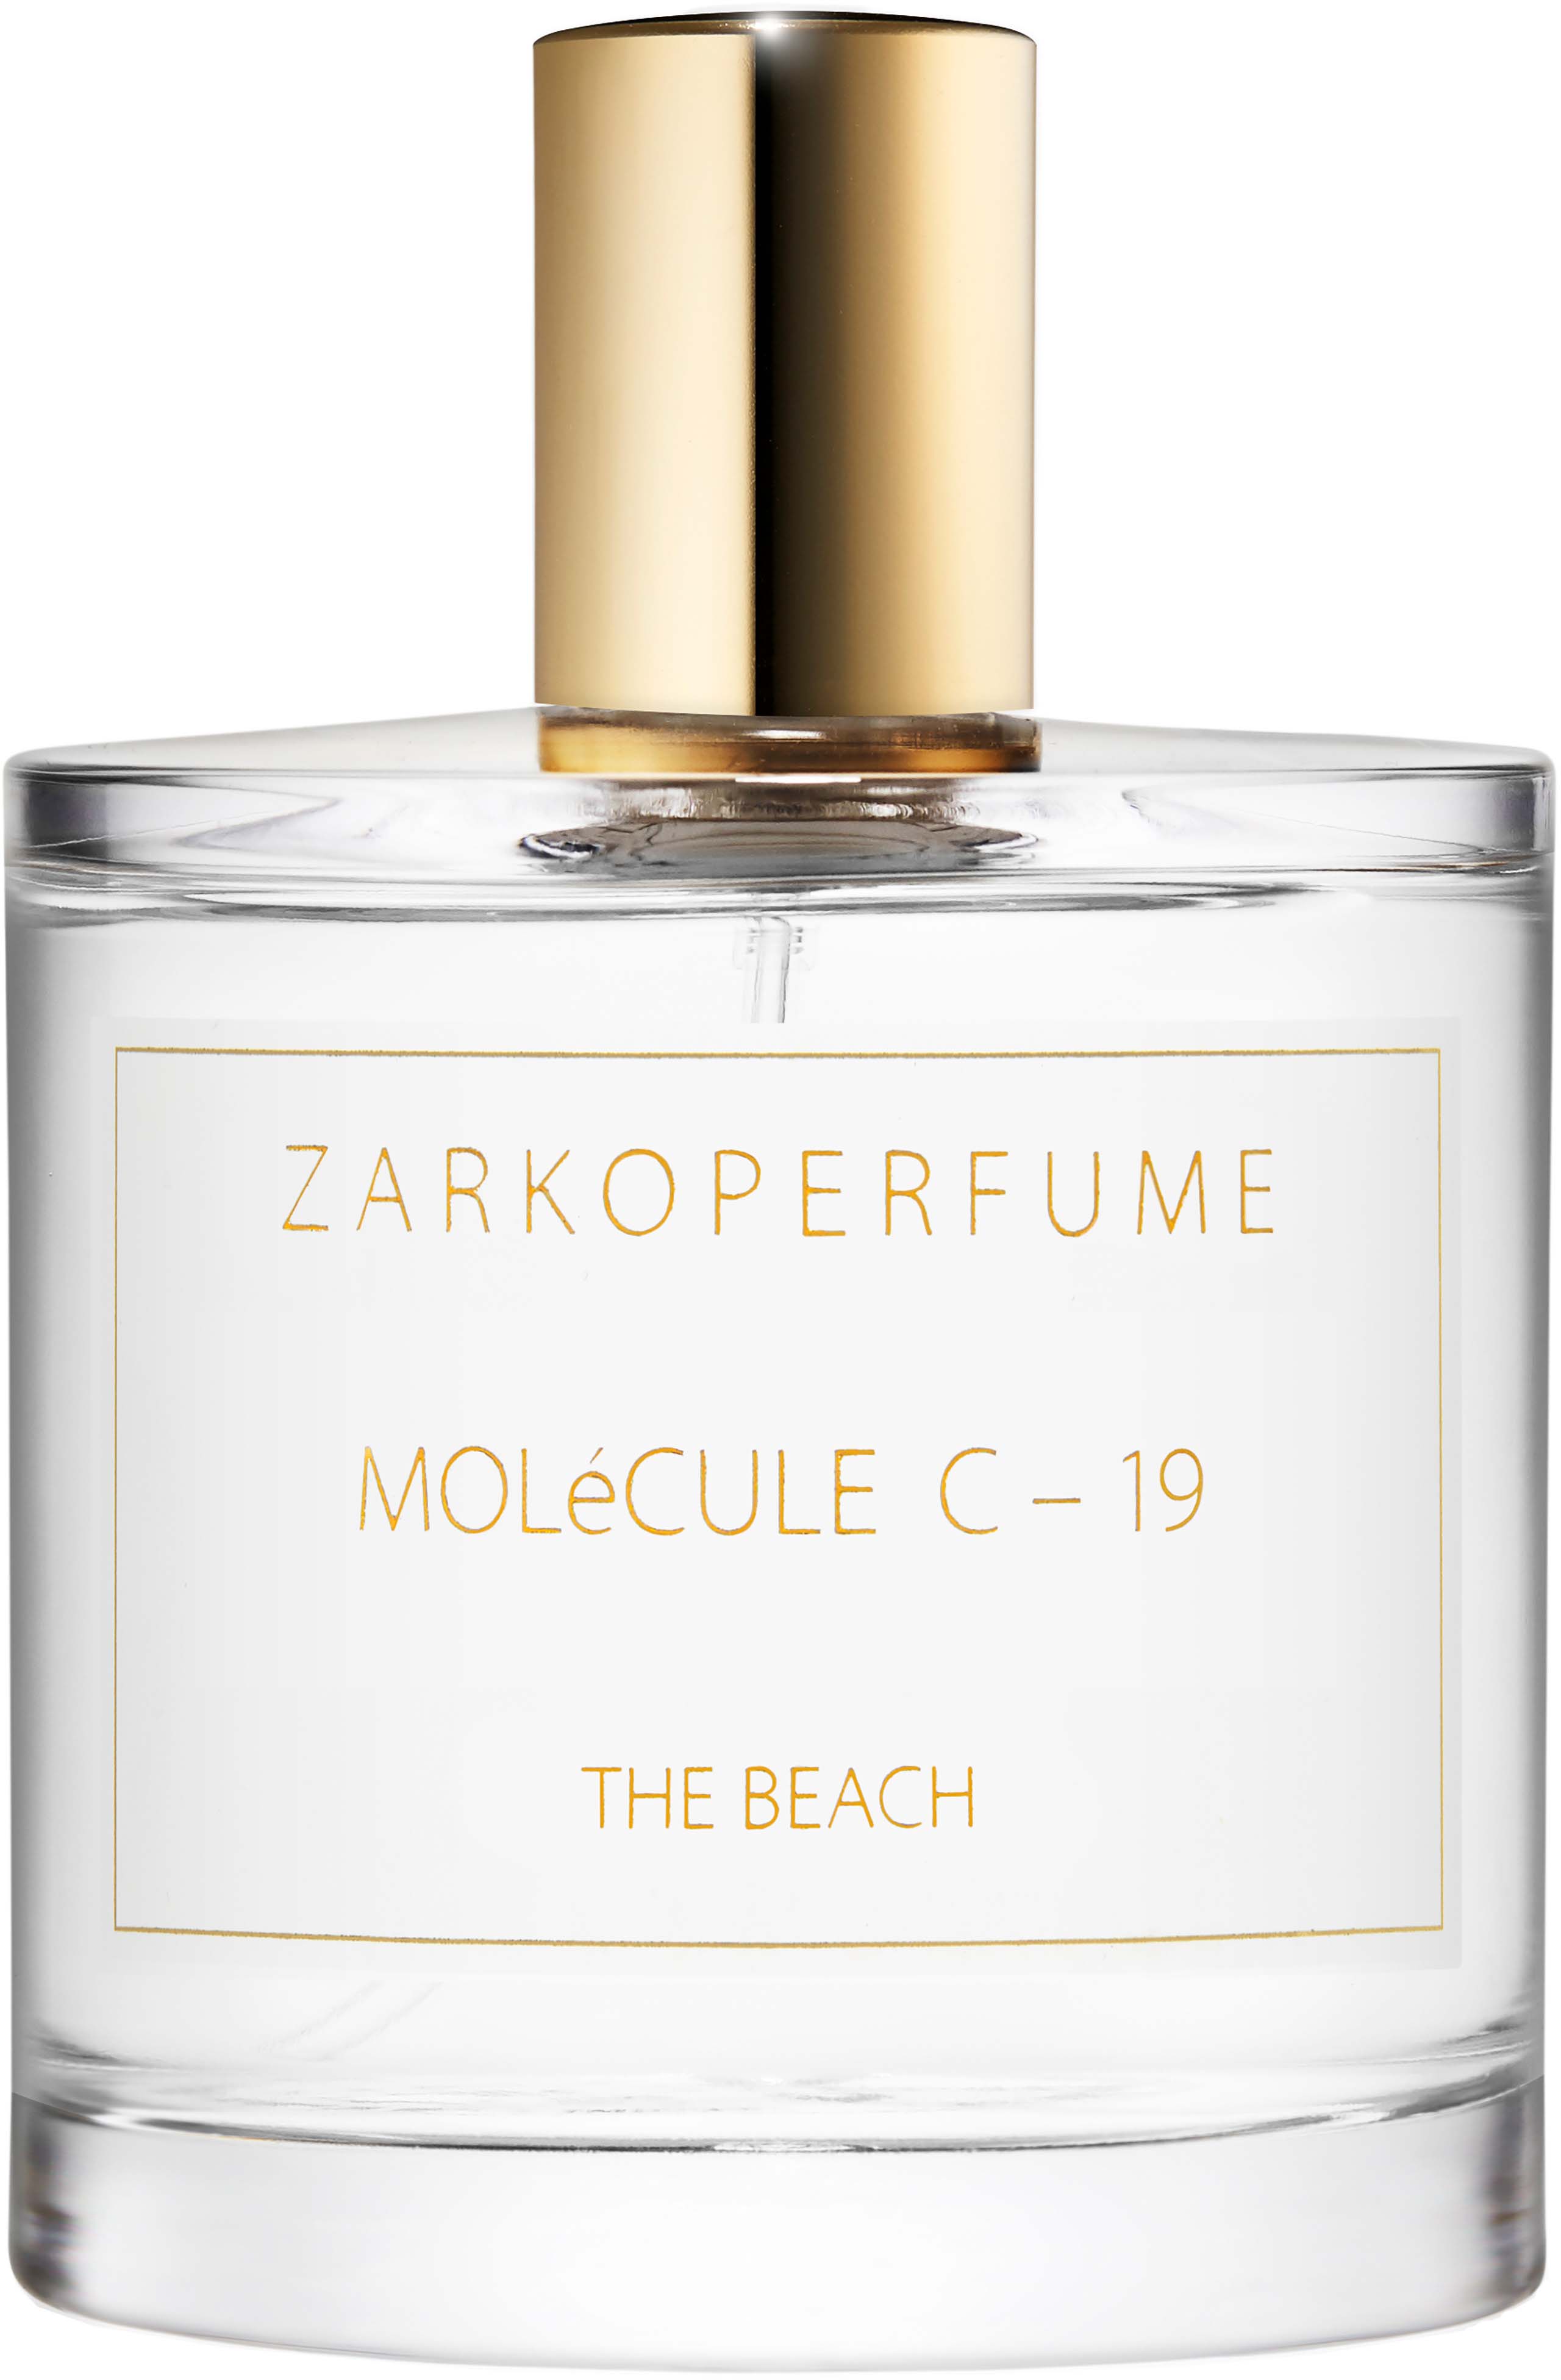 zarkoperfume molecule c-19 - the beach woda perfumowana 100 ml   